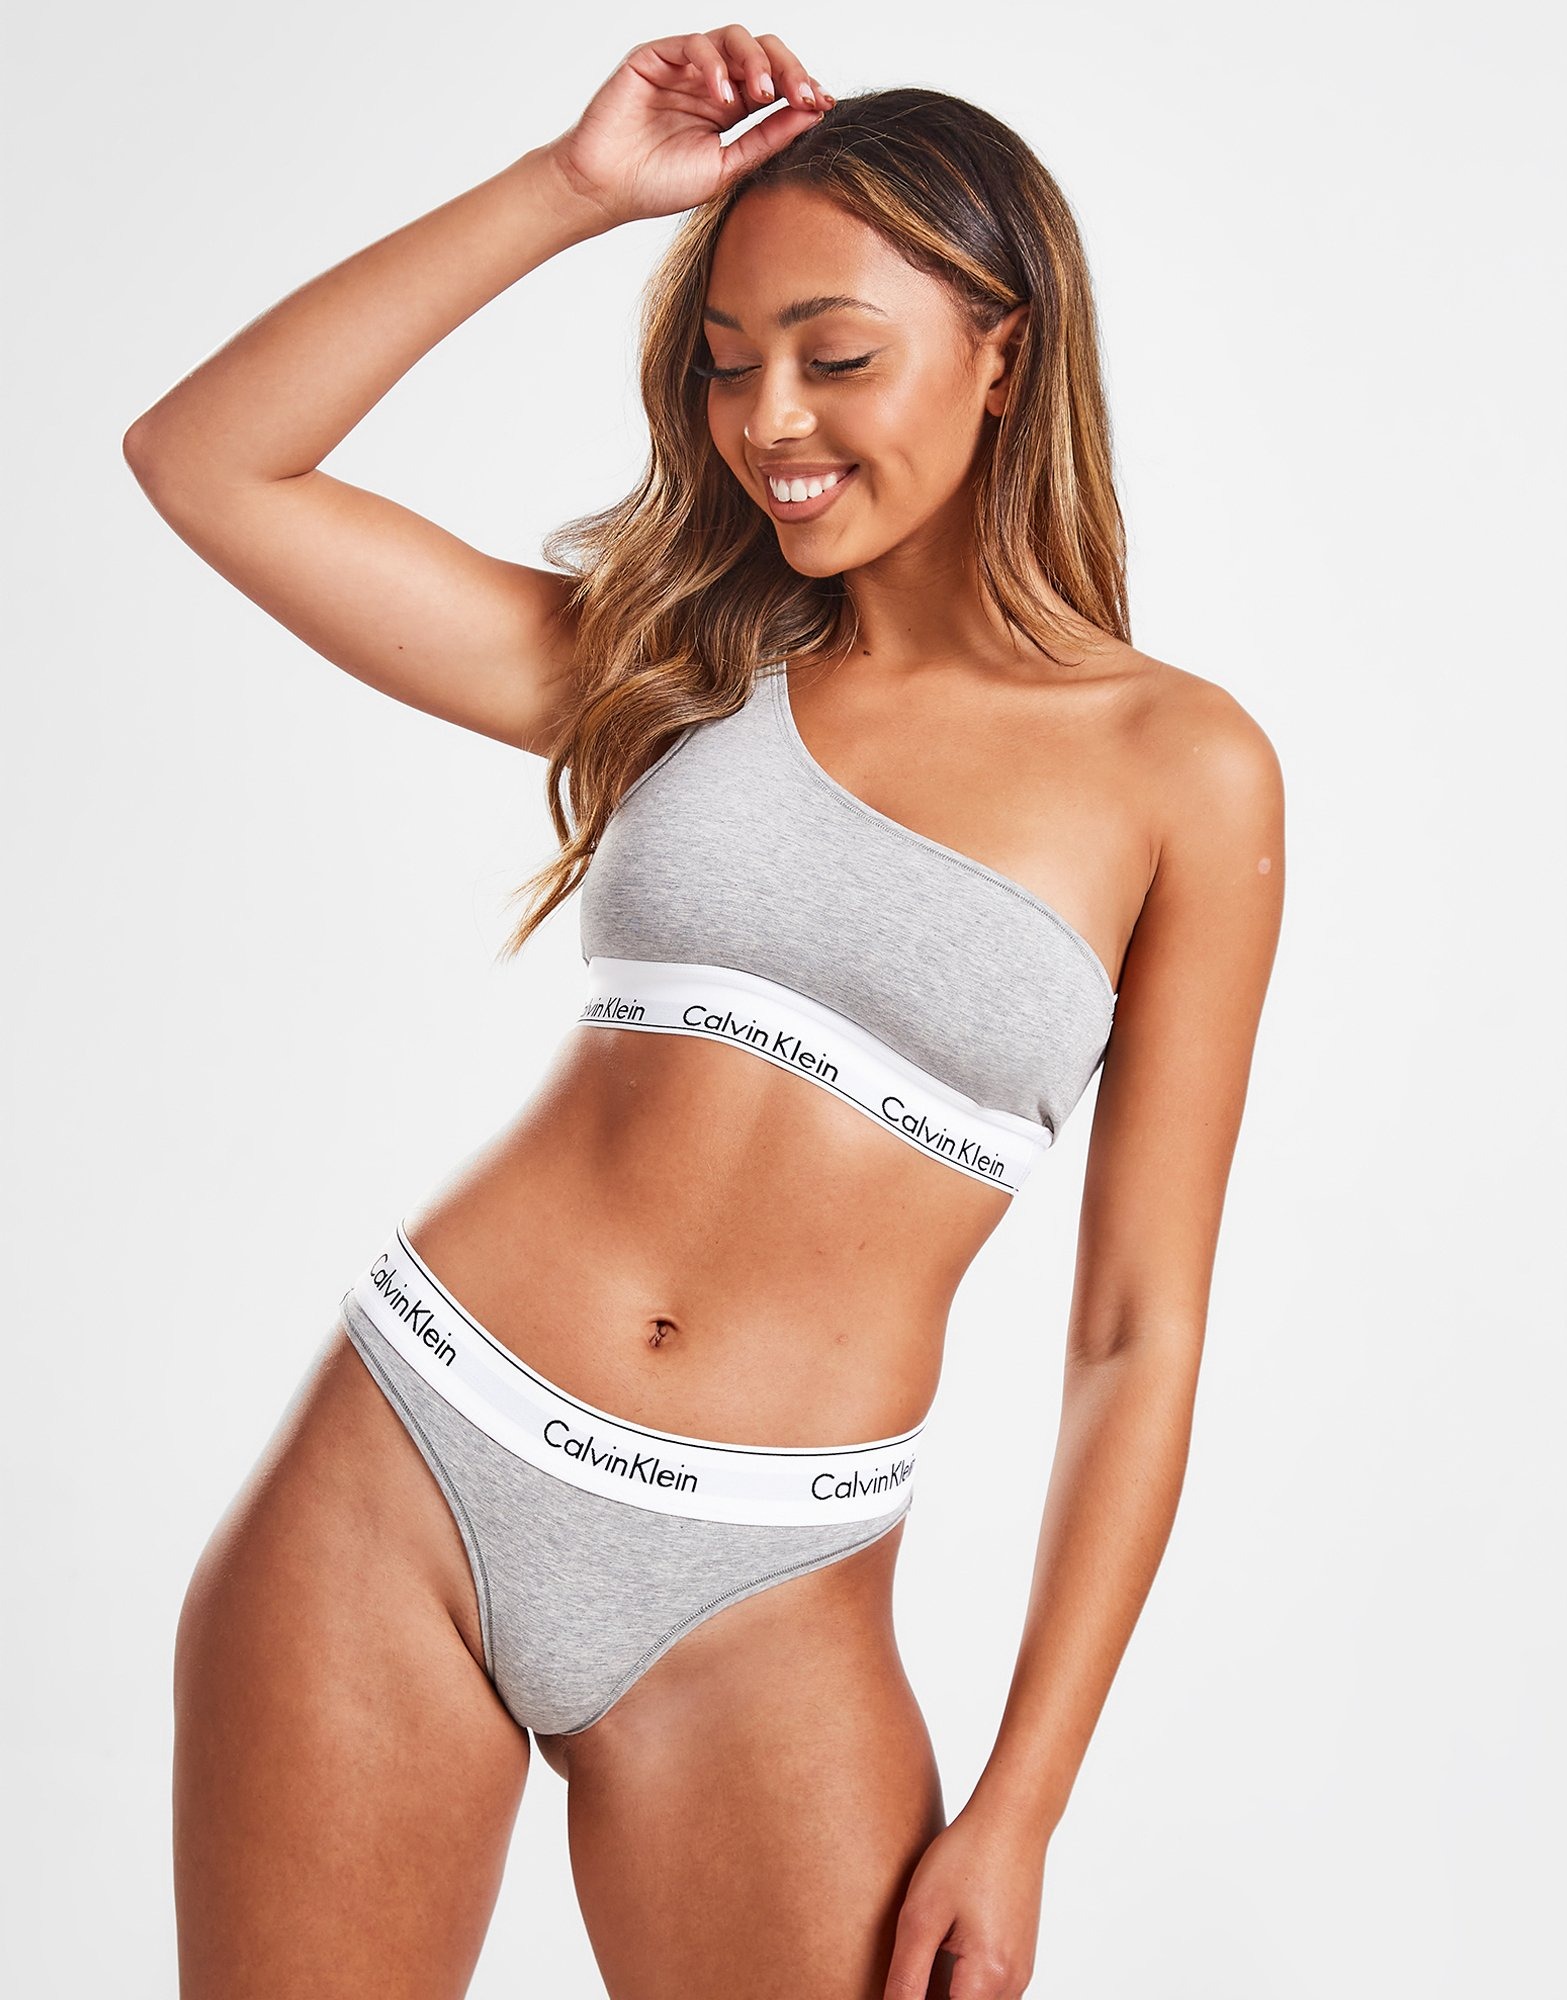 Buy Women's Underwear Calvin Klein at affordable prices — free